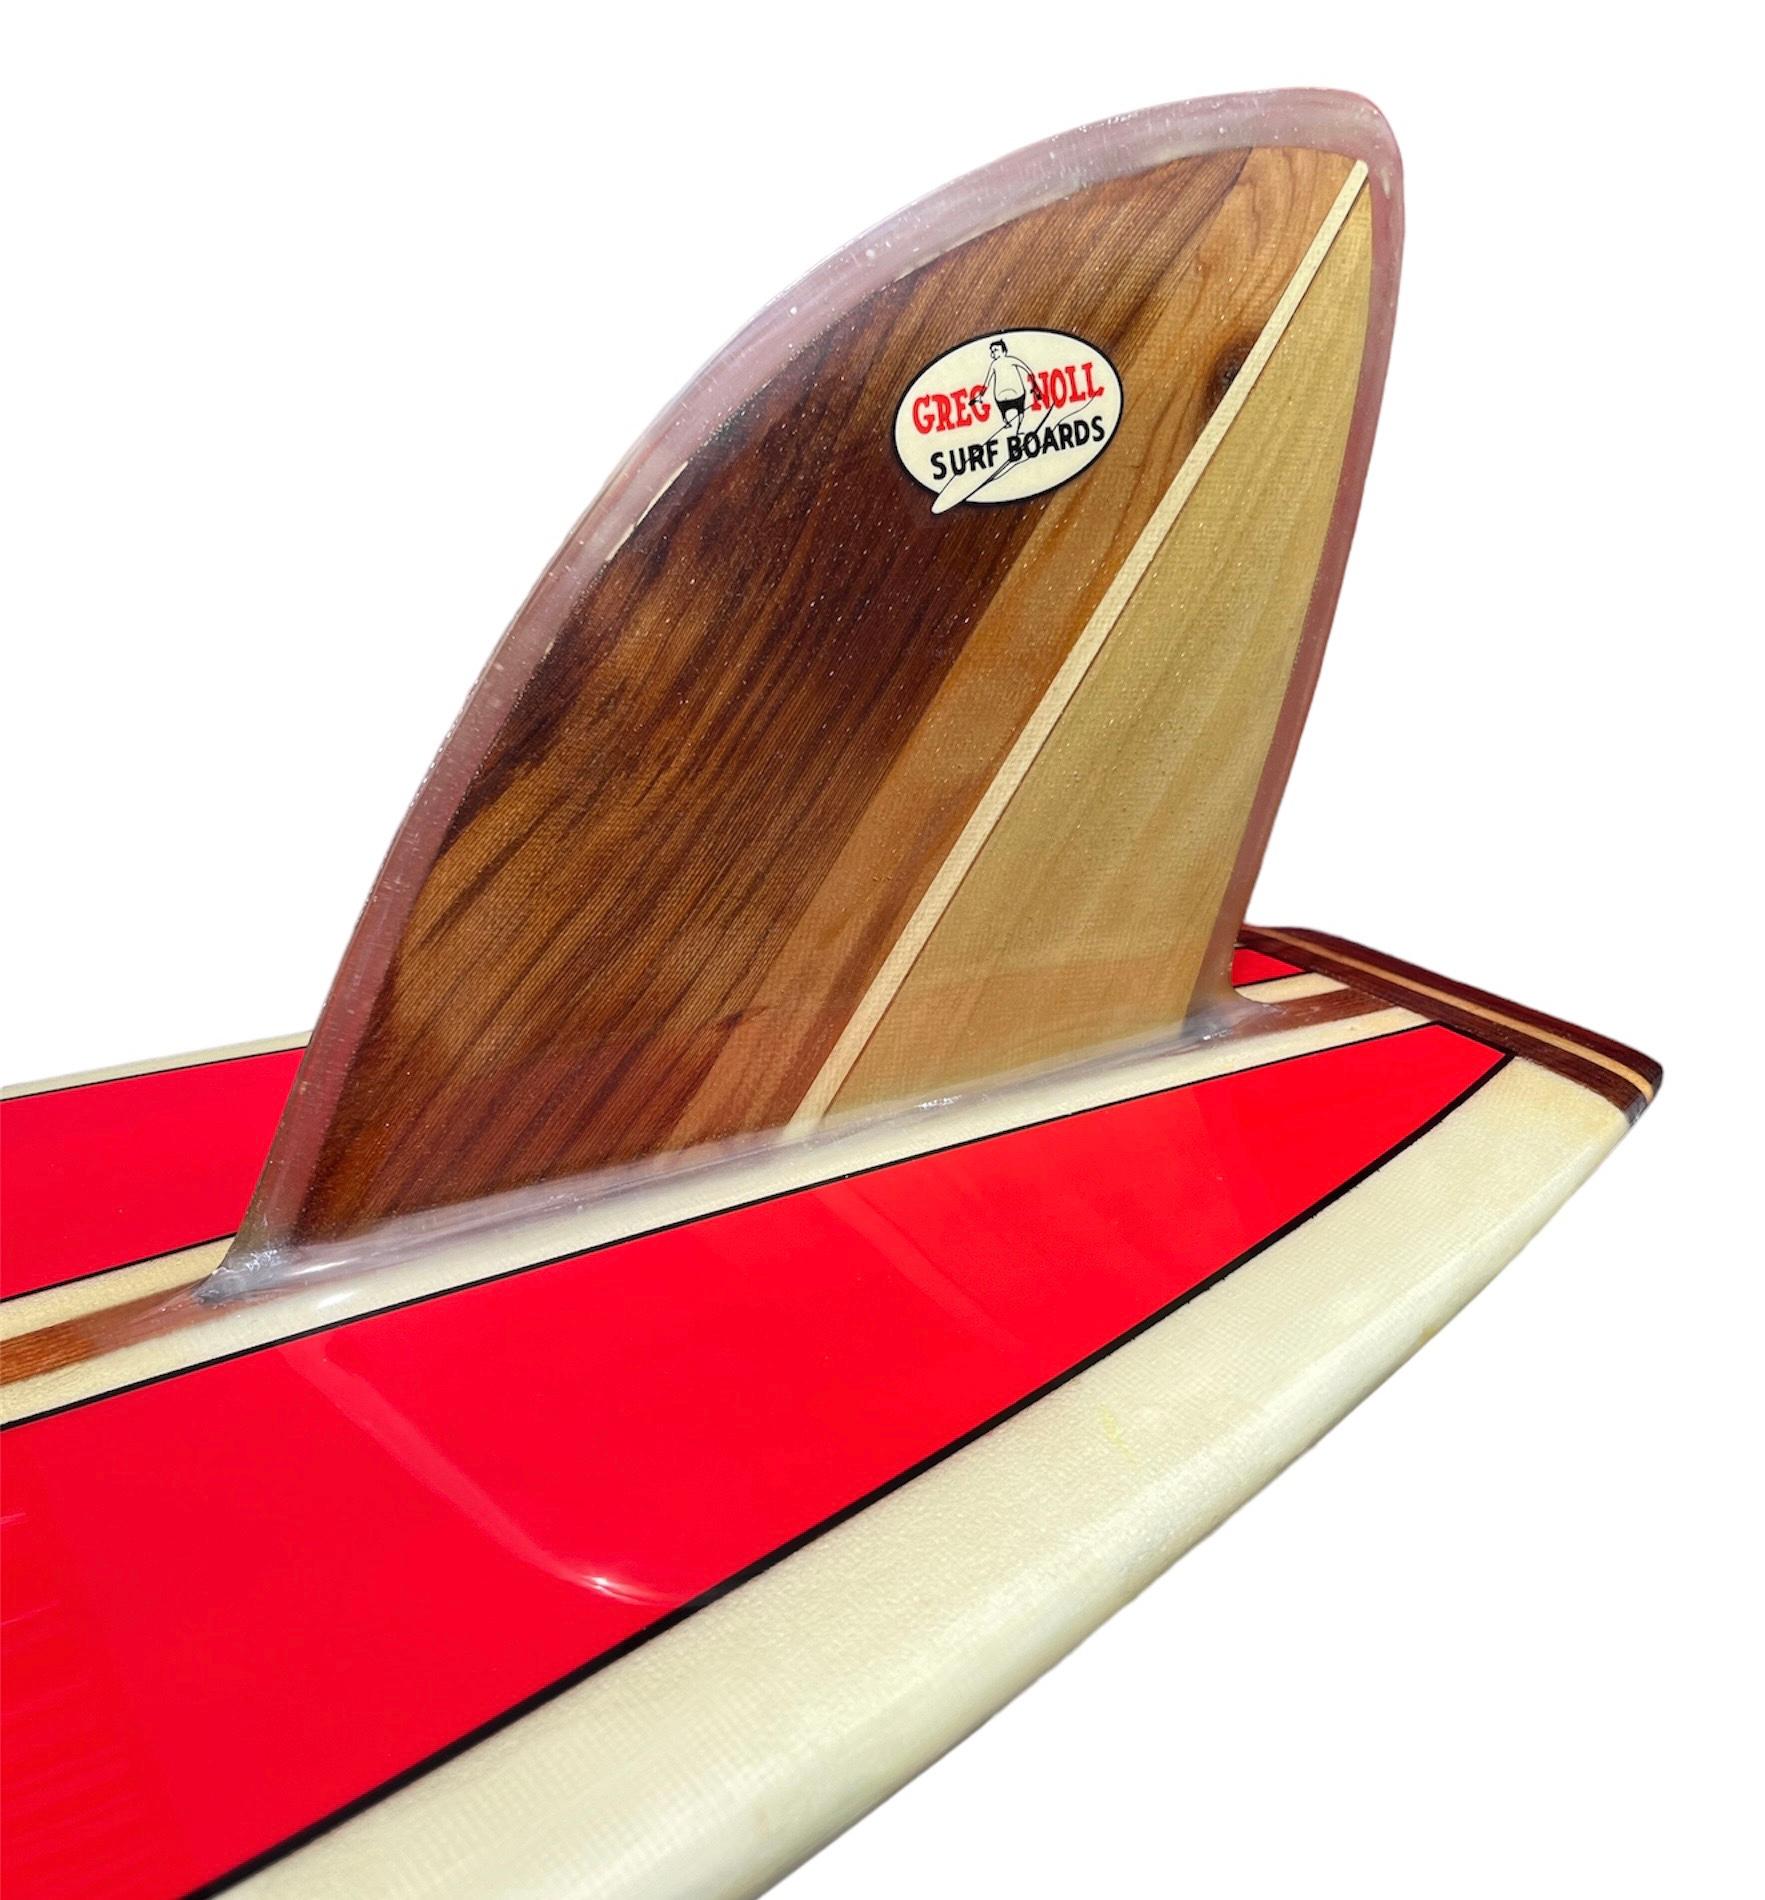 Mid-20th Century Vintage 1960s Greg Noll “S” stringer model longboard